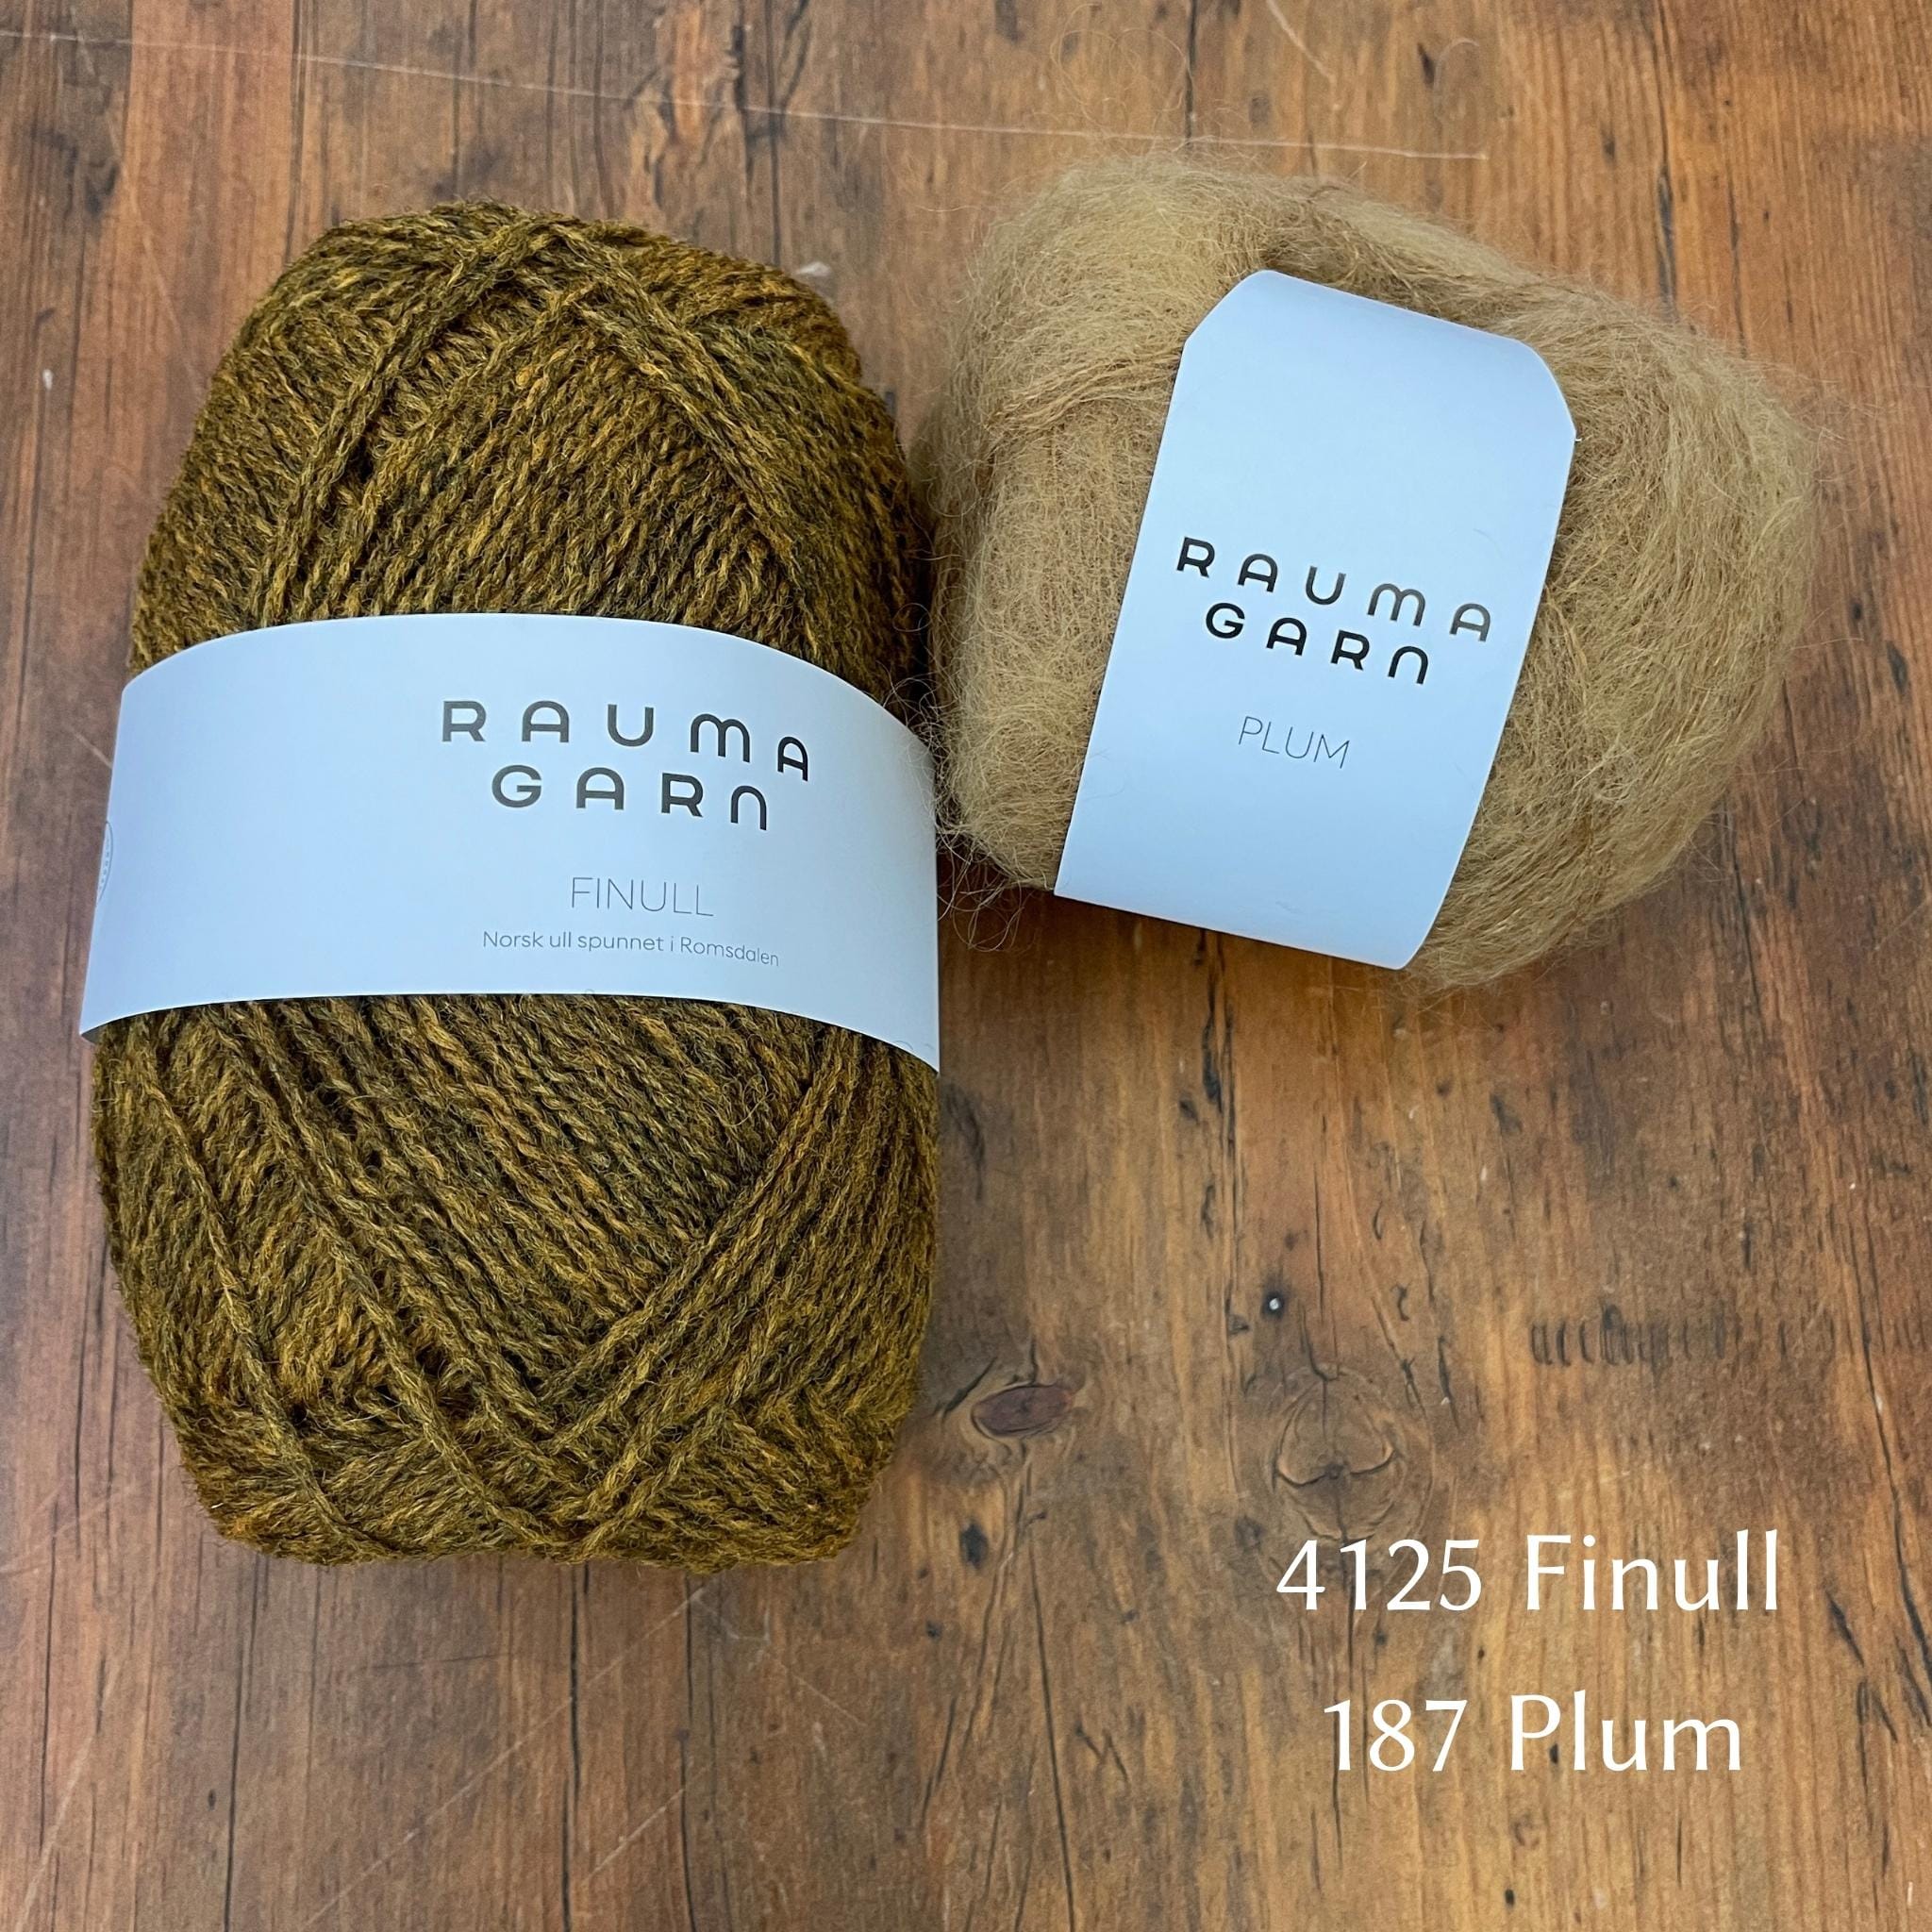 Ball of Rauma Finullgarn yarn in heathered gold with coordinating Plum yarn 